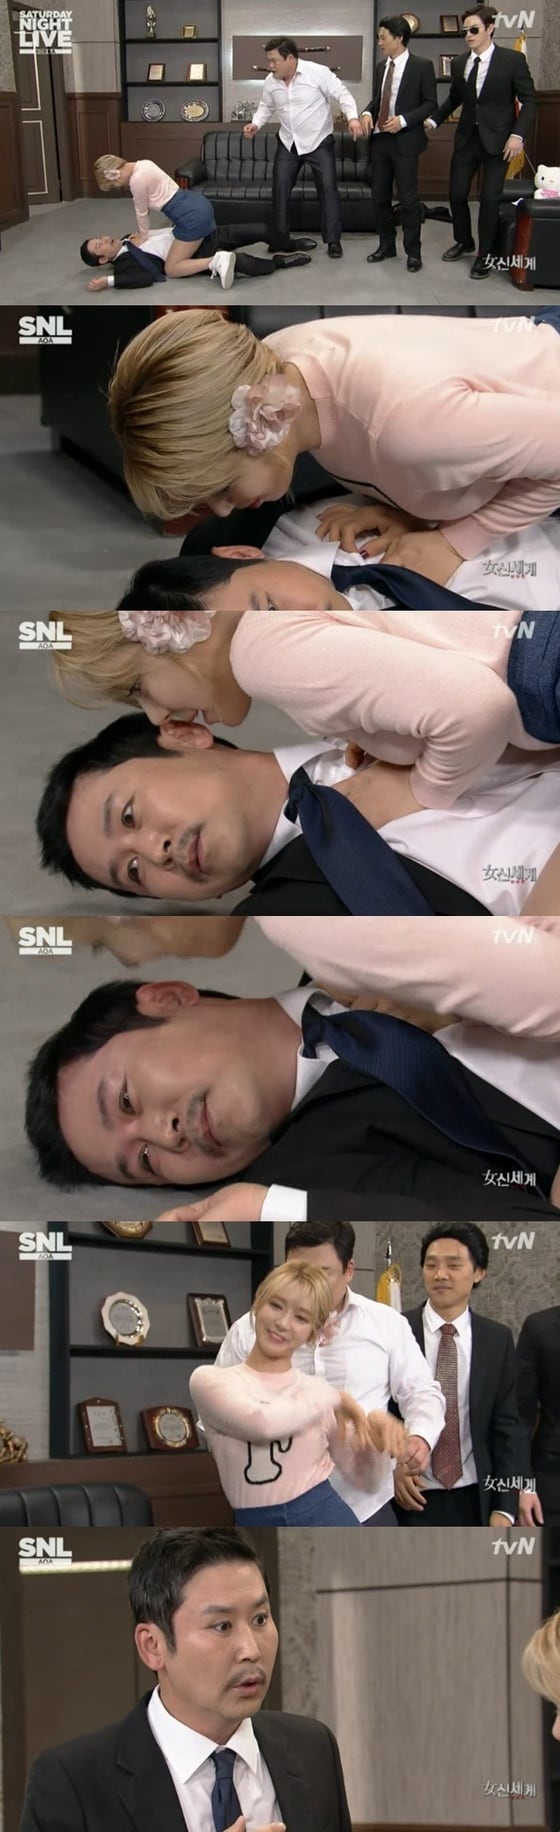 AOA 초아의 야릇한 애교로 신동엽을 홀렸다. © News1star / tvN 'SNL 코리아' 캡처